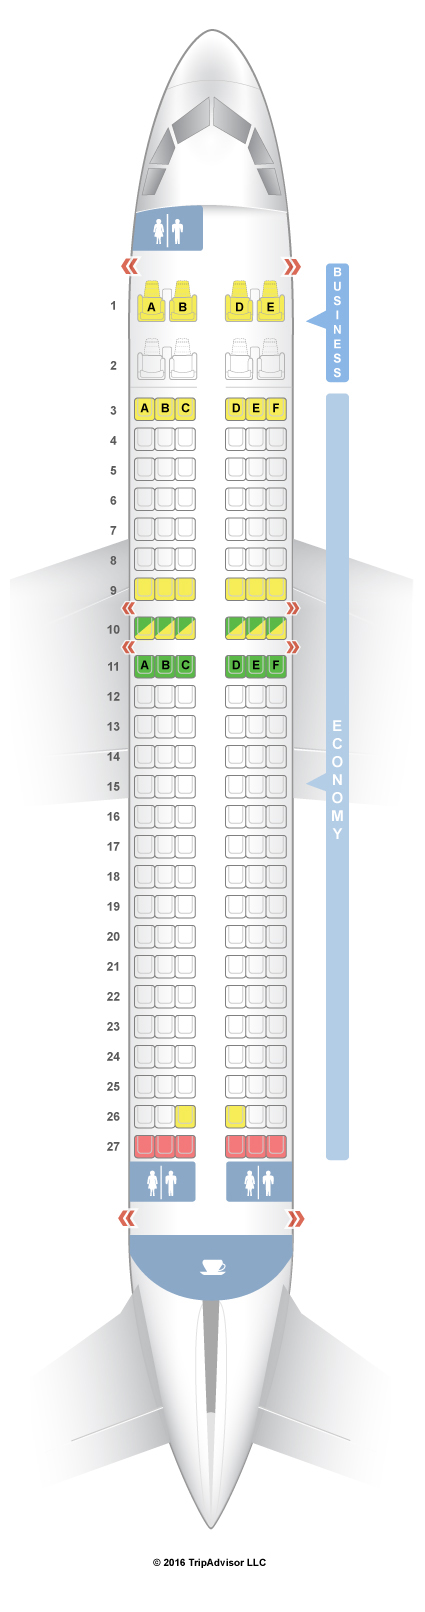 Seatguru Seat Map S7 Airlines Seatguru